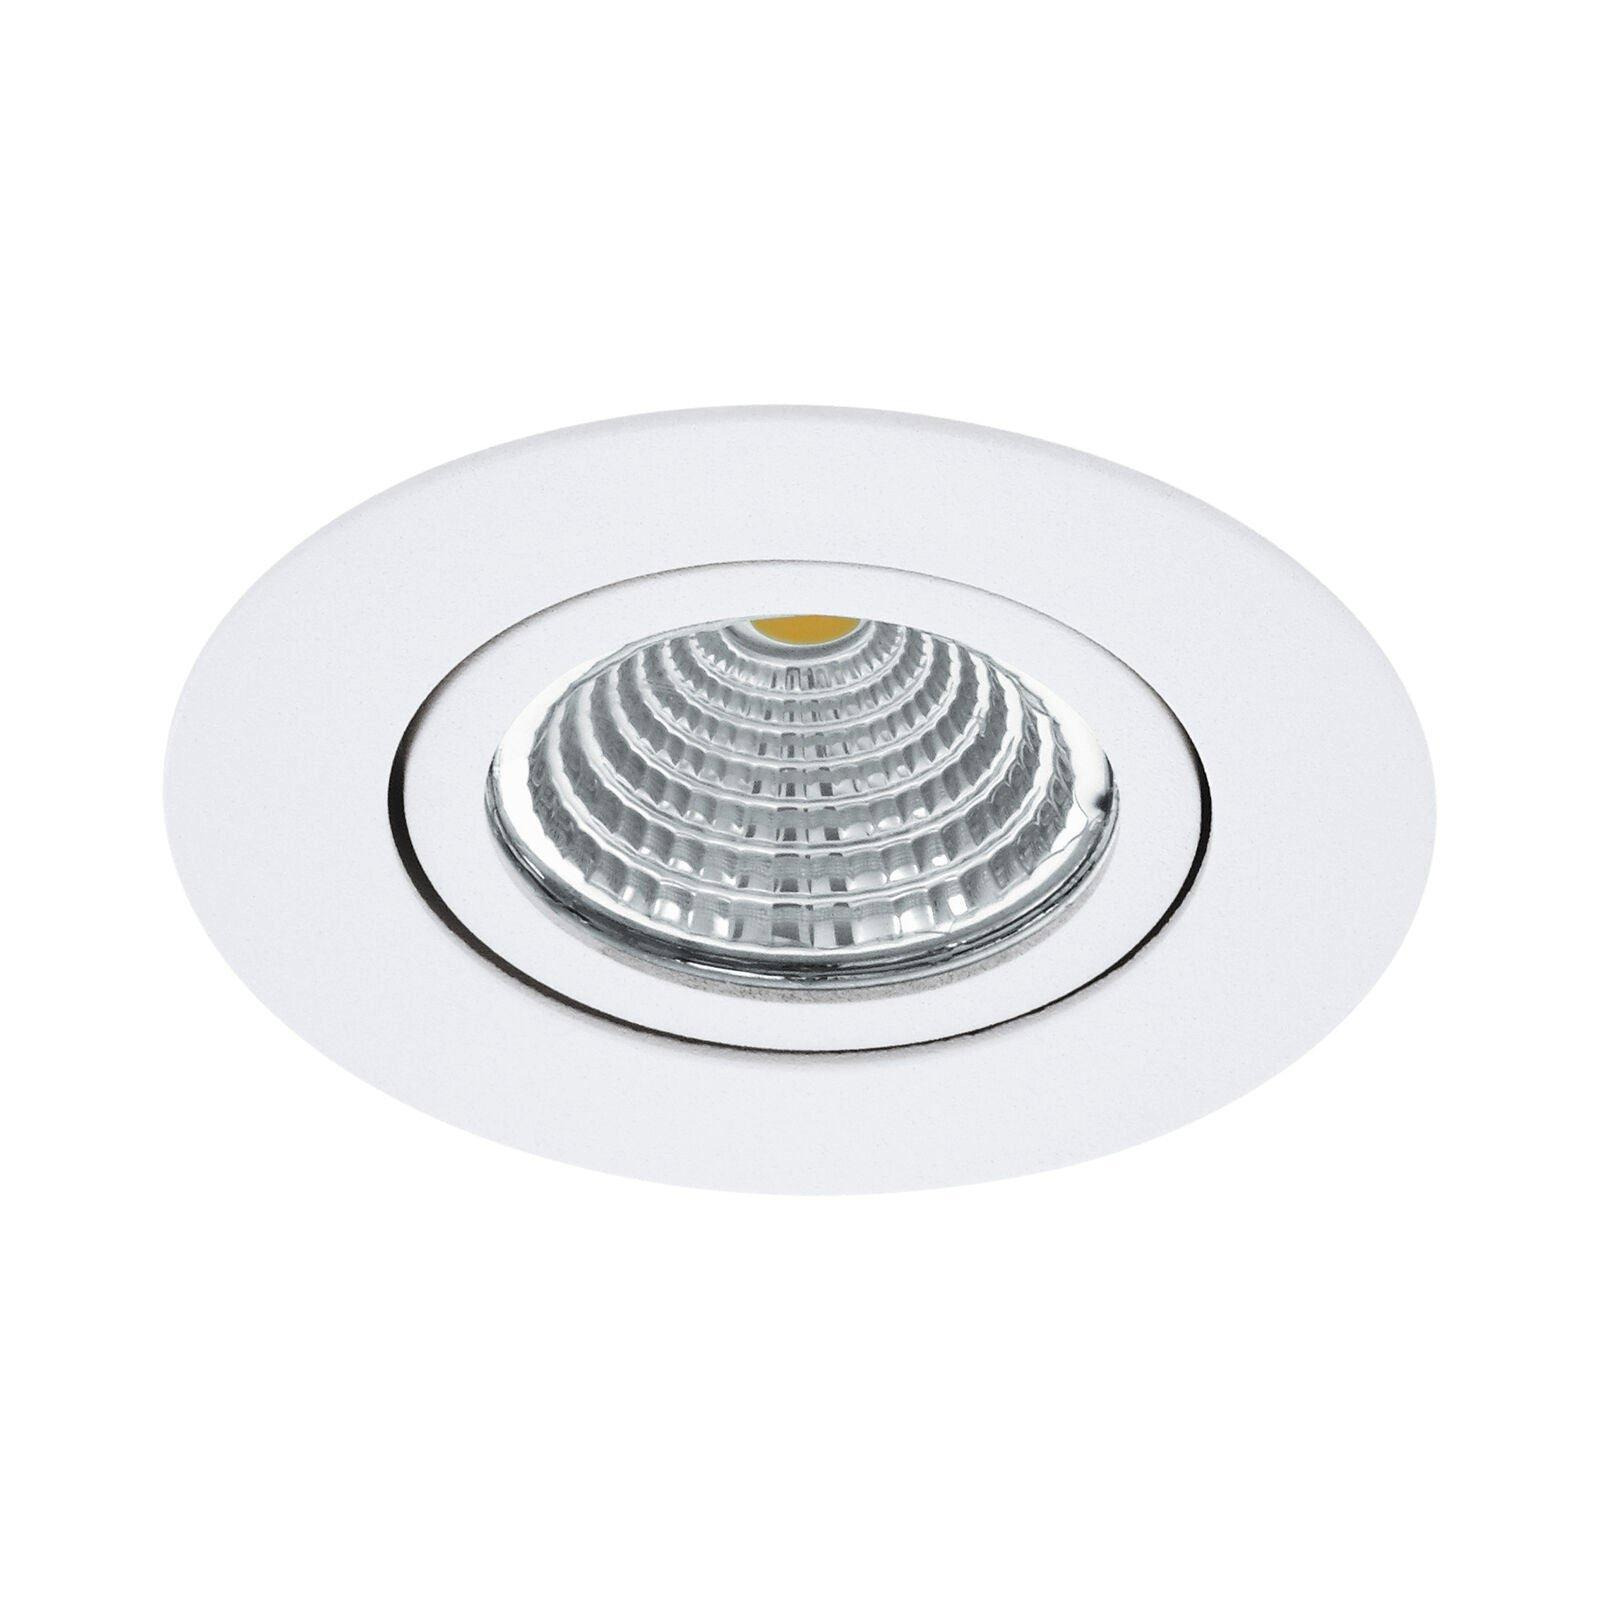 Wall / Ceiling Flush Downlight White Recess Spotlight 6W Built in LED - image 1